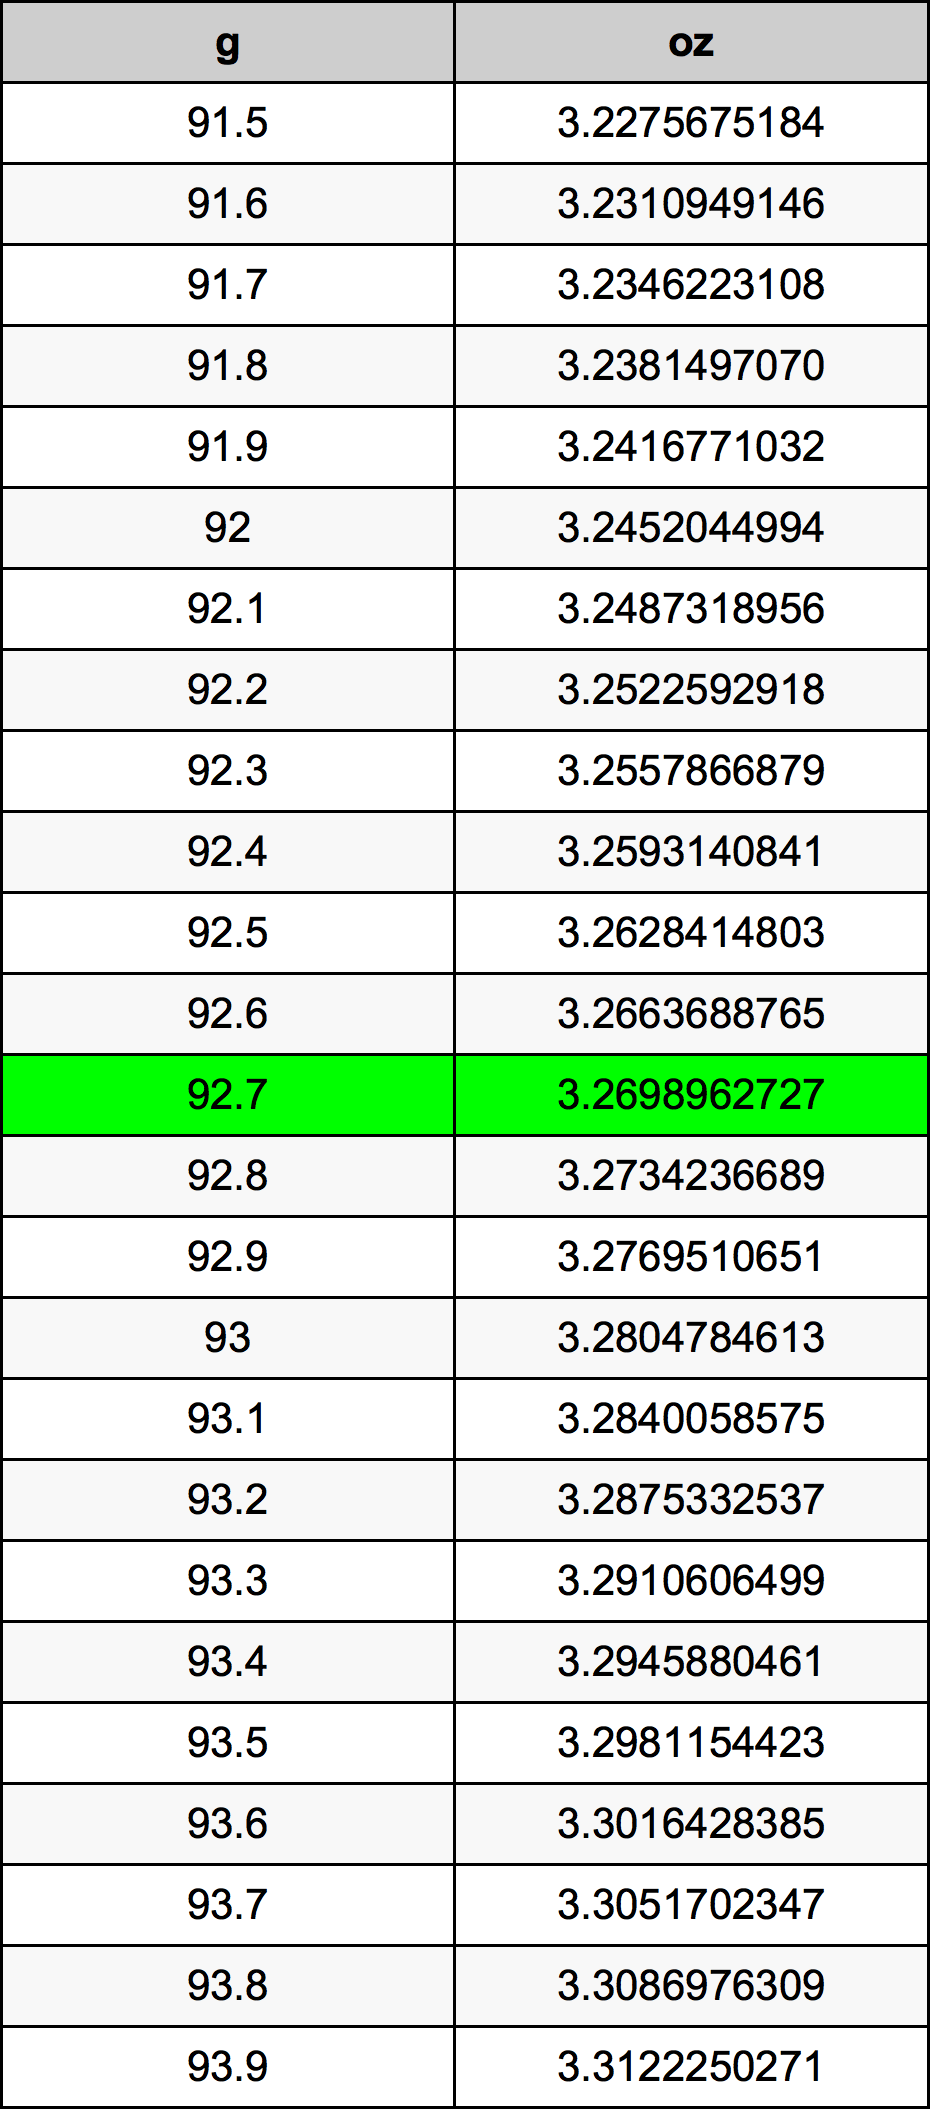 92.7 غرام جدول تحويل